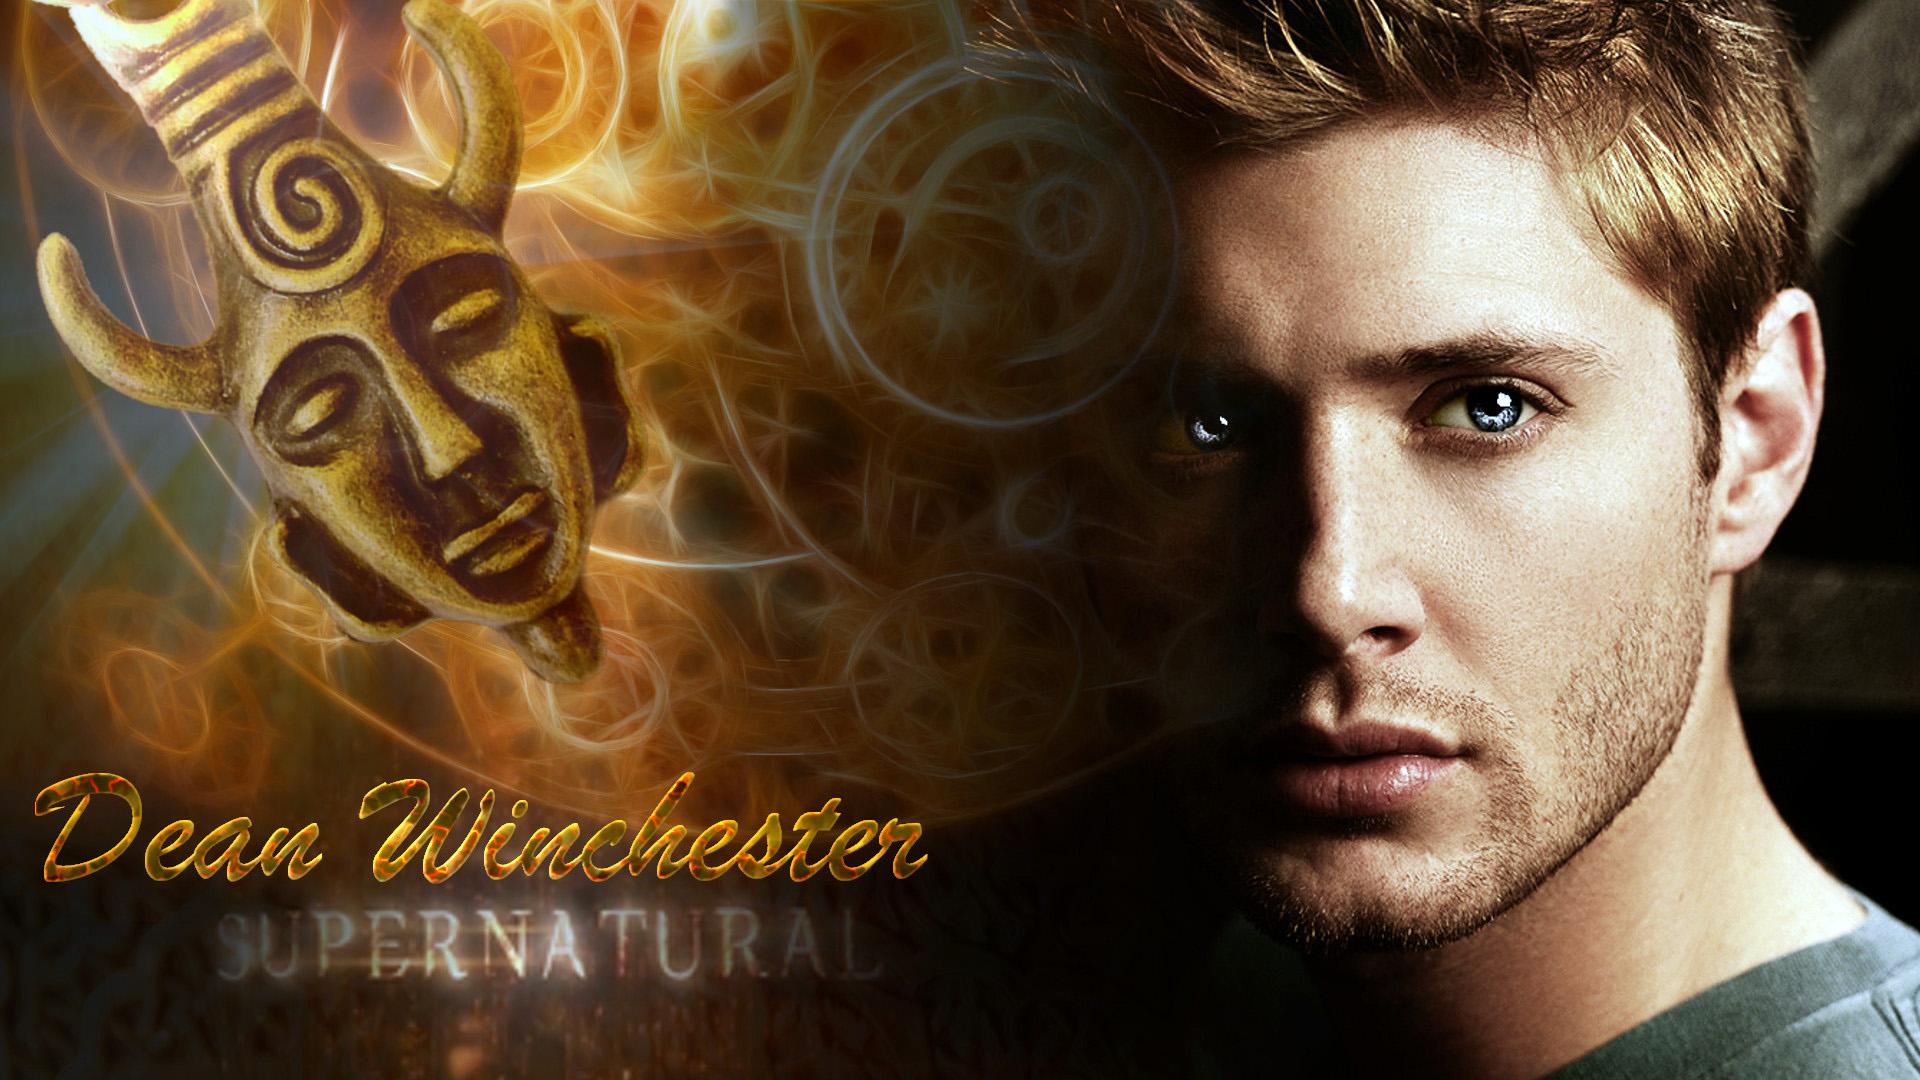 Dean Winchester Supernatural Wallpaper wallpaper uploaded on December